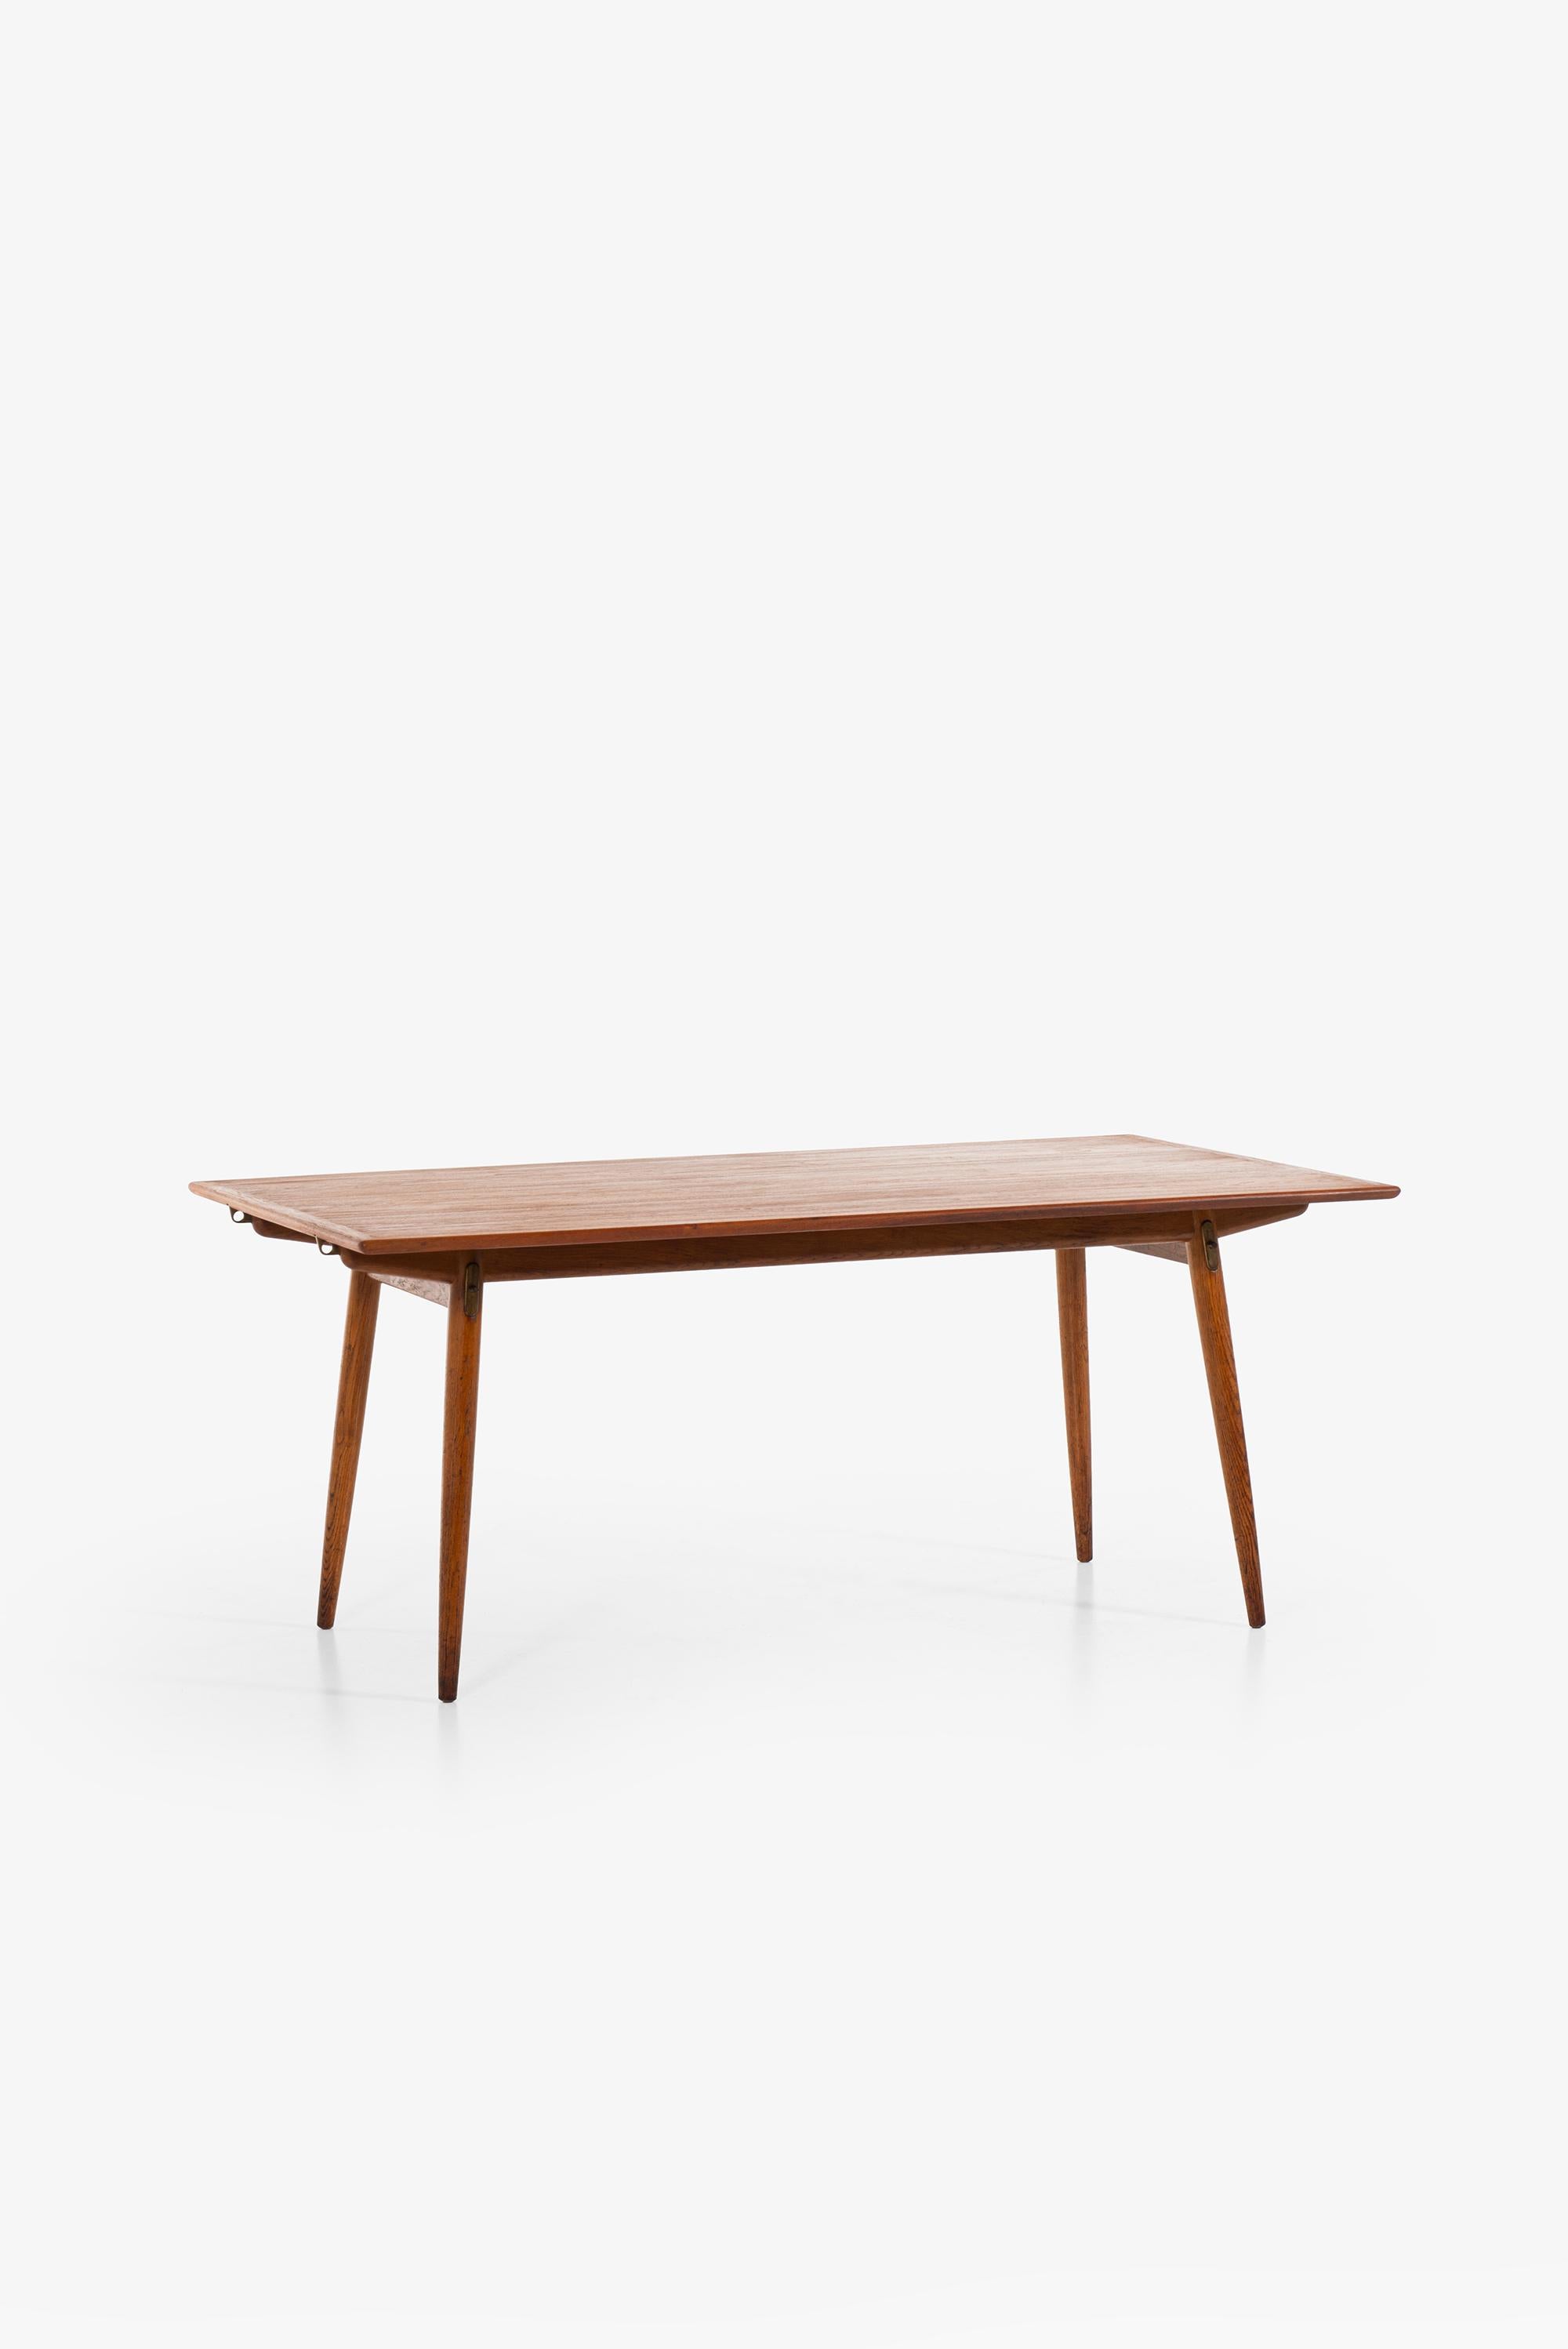 Very rare dining table model JH-570 designed by Hans Wegner. Produced by cabinetmaker Johannes Hansen in Denmark.